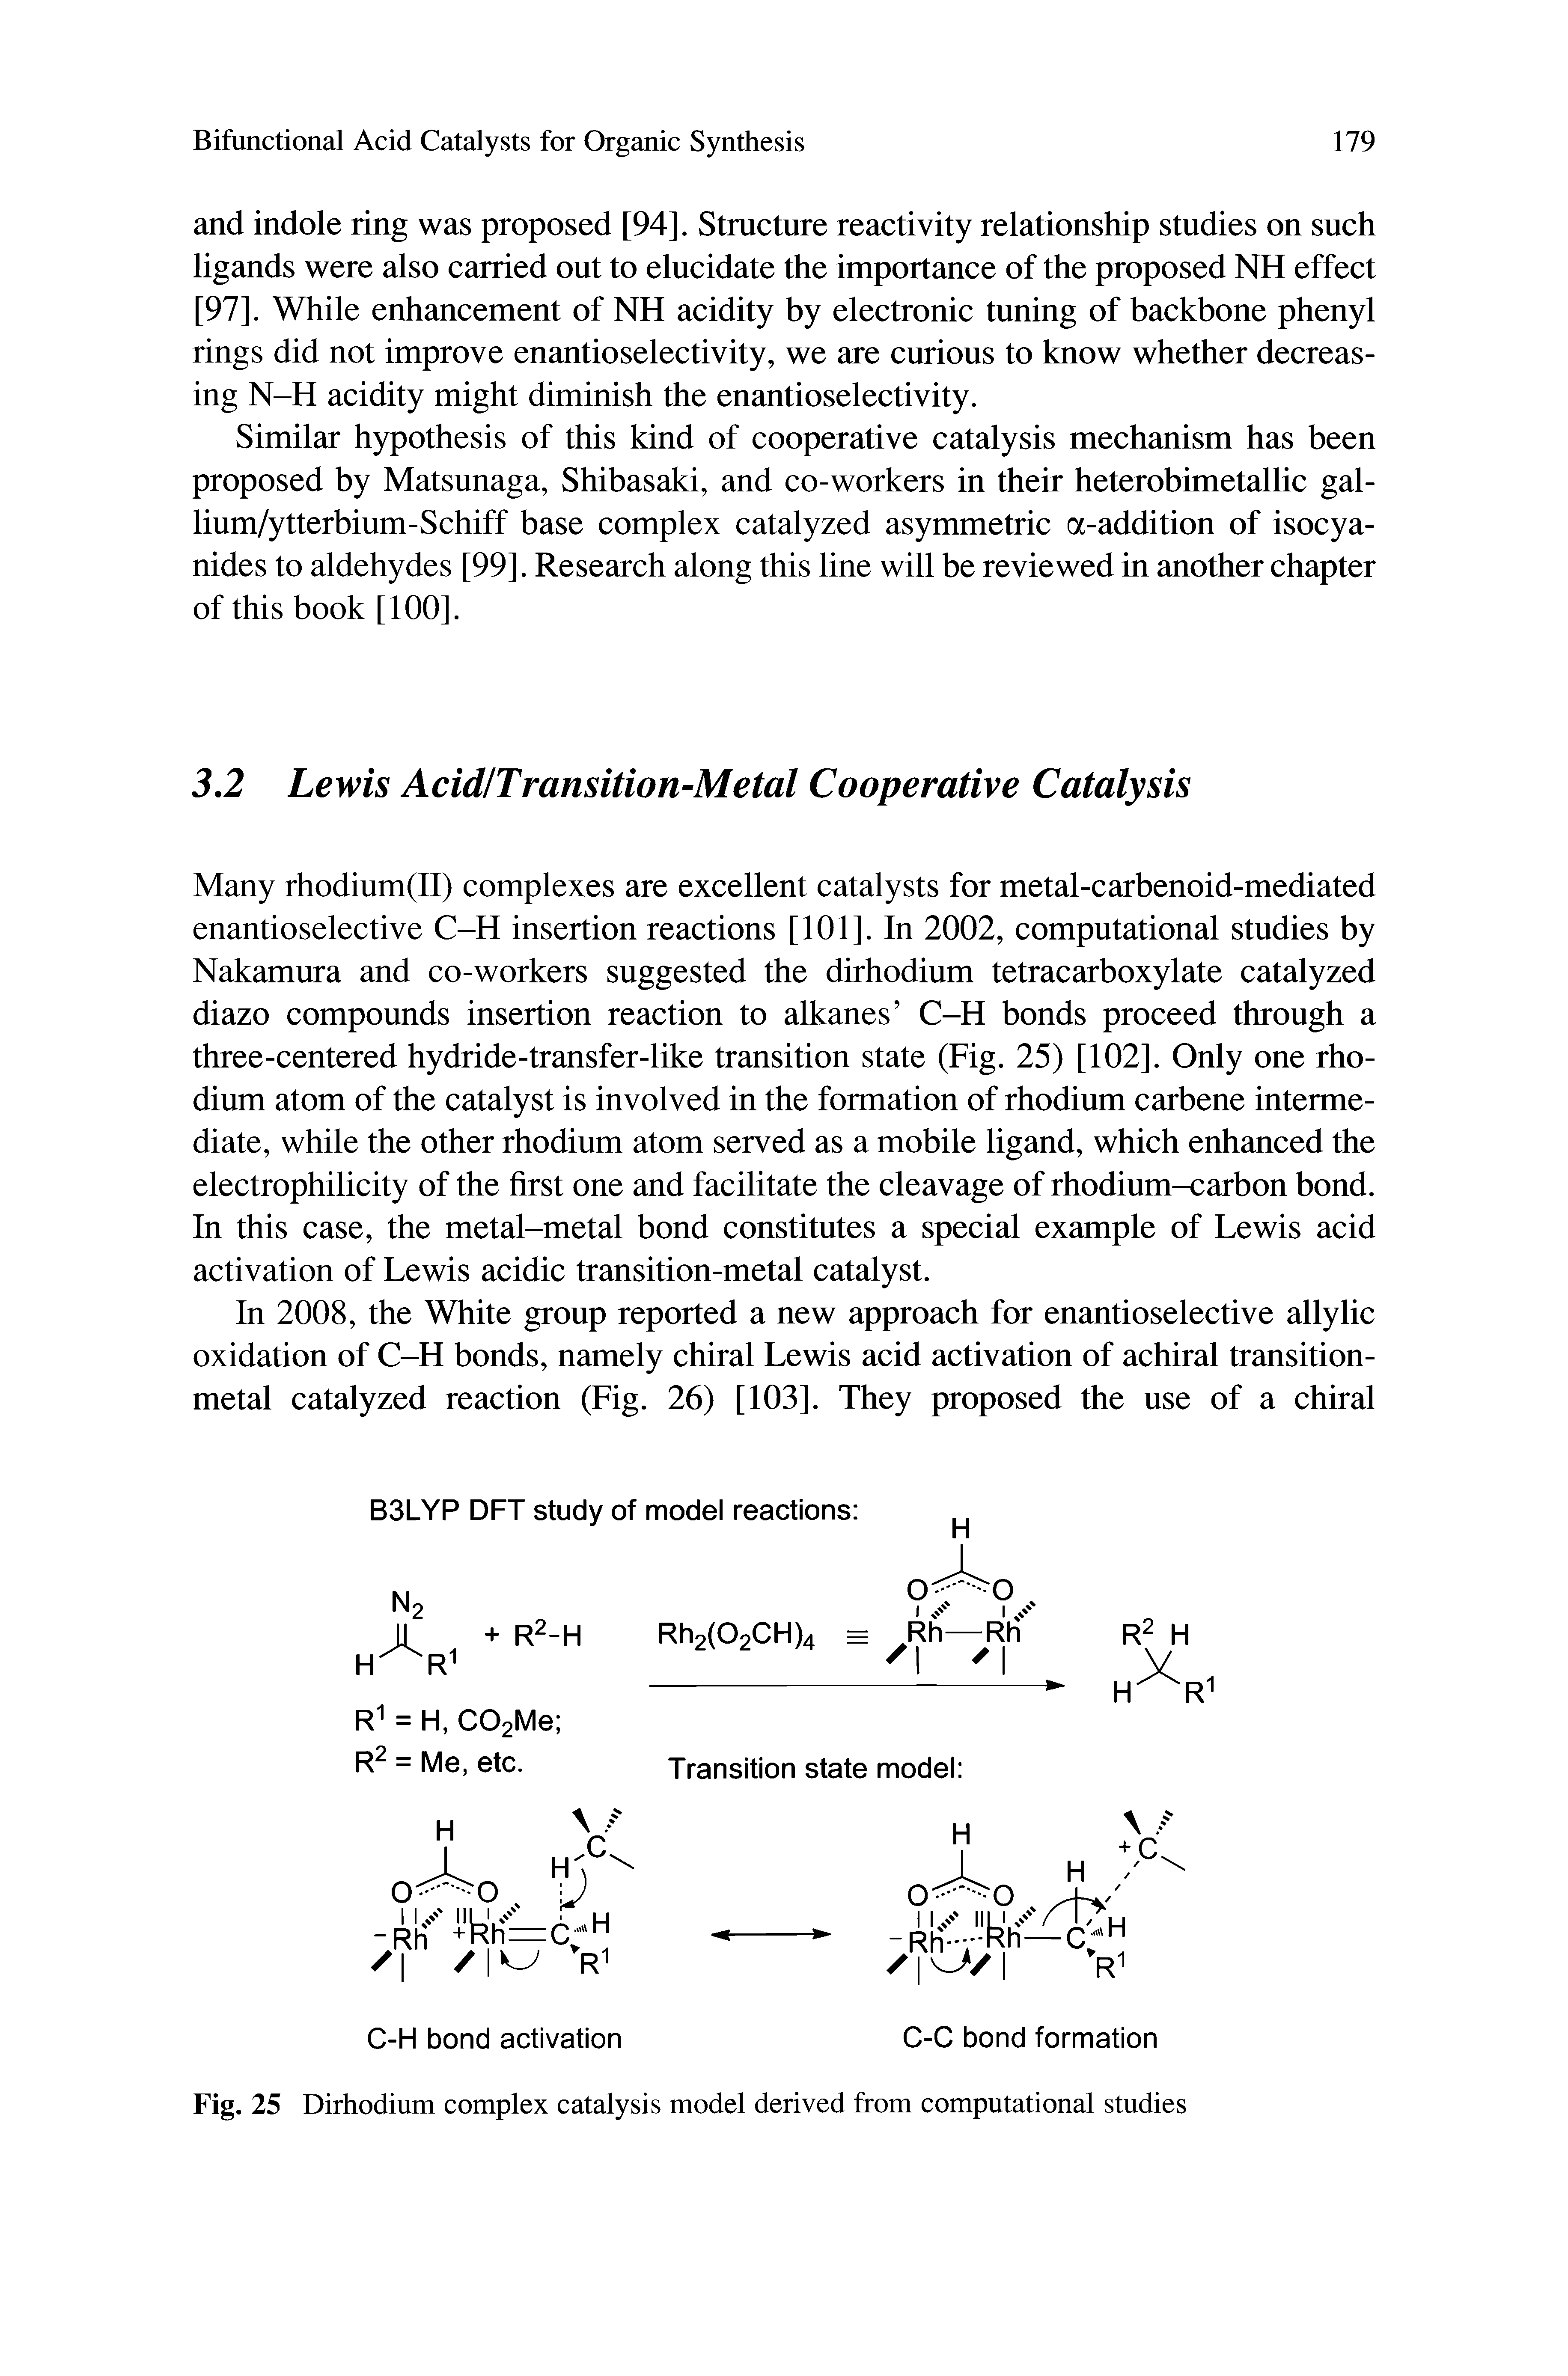 Fig. 25 Dirhodium complex catalysis model derived from computational studies...